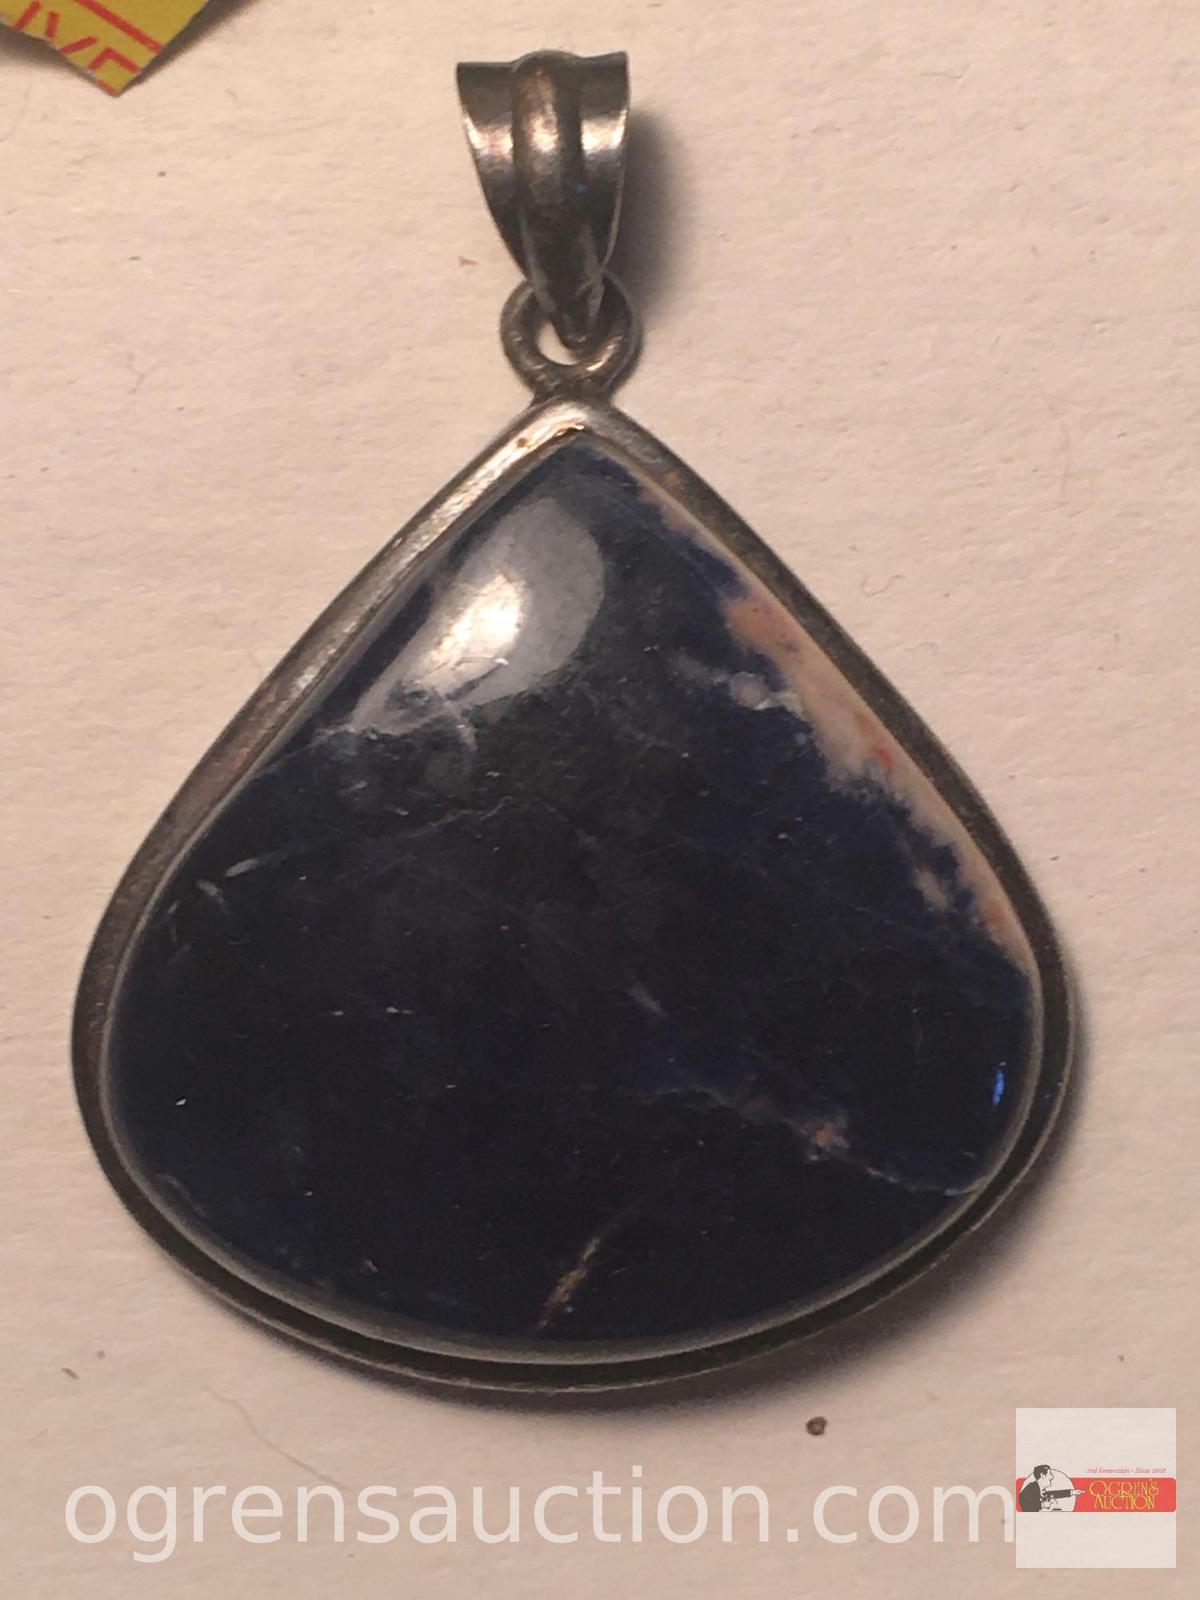 Jewelry - Pendant, sterling bezel, black stone